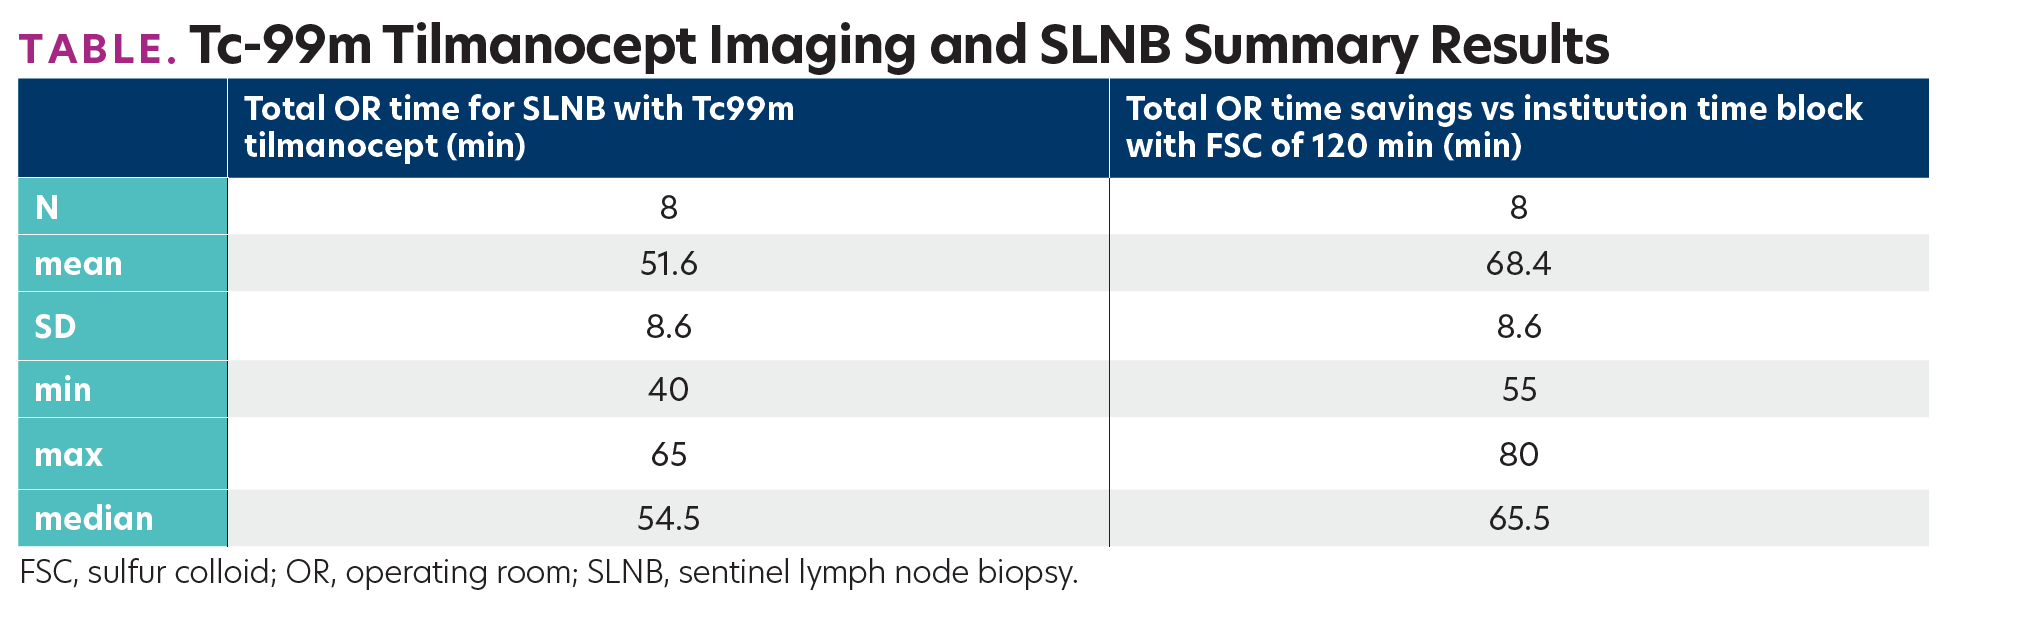 TABLE. Tc-99m Tilmanocept Imaging and SLNB Summary Results